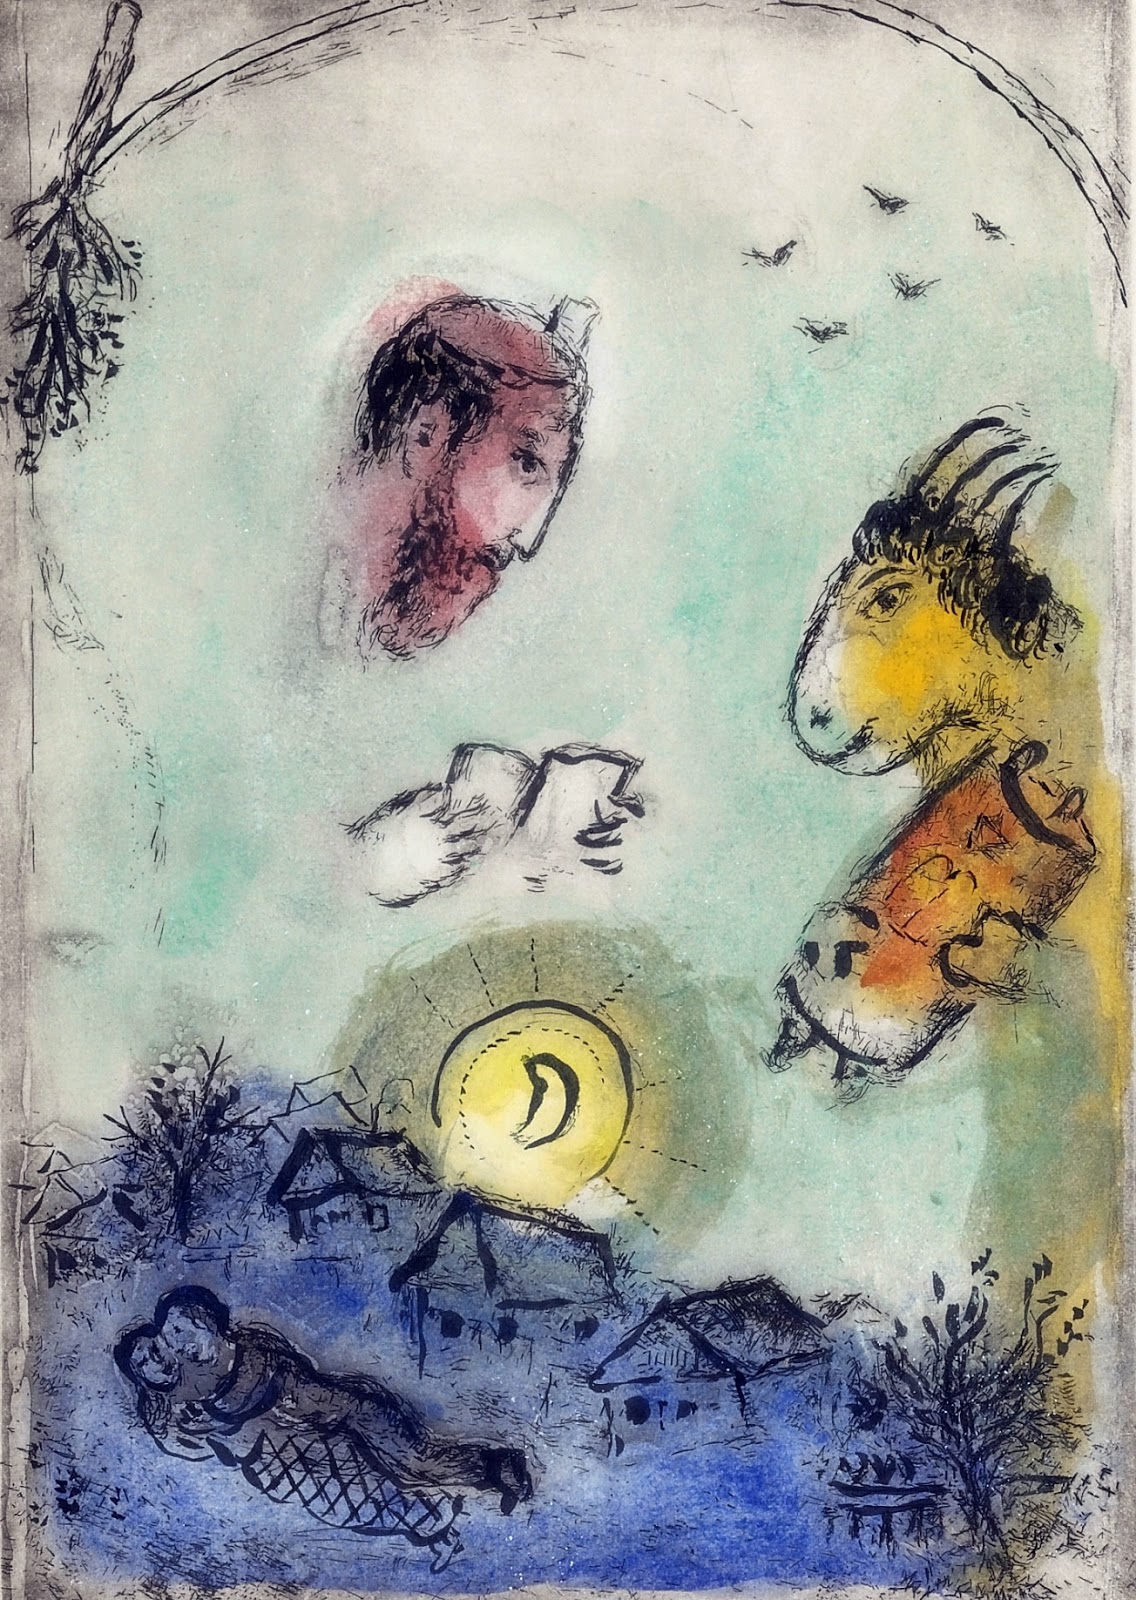 Marc+Chagall-1887-1985 (232).jpg